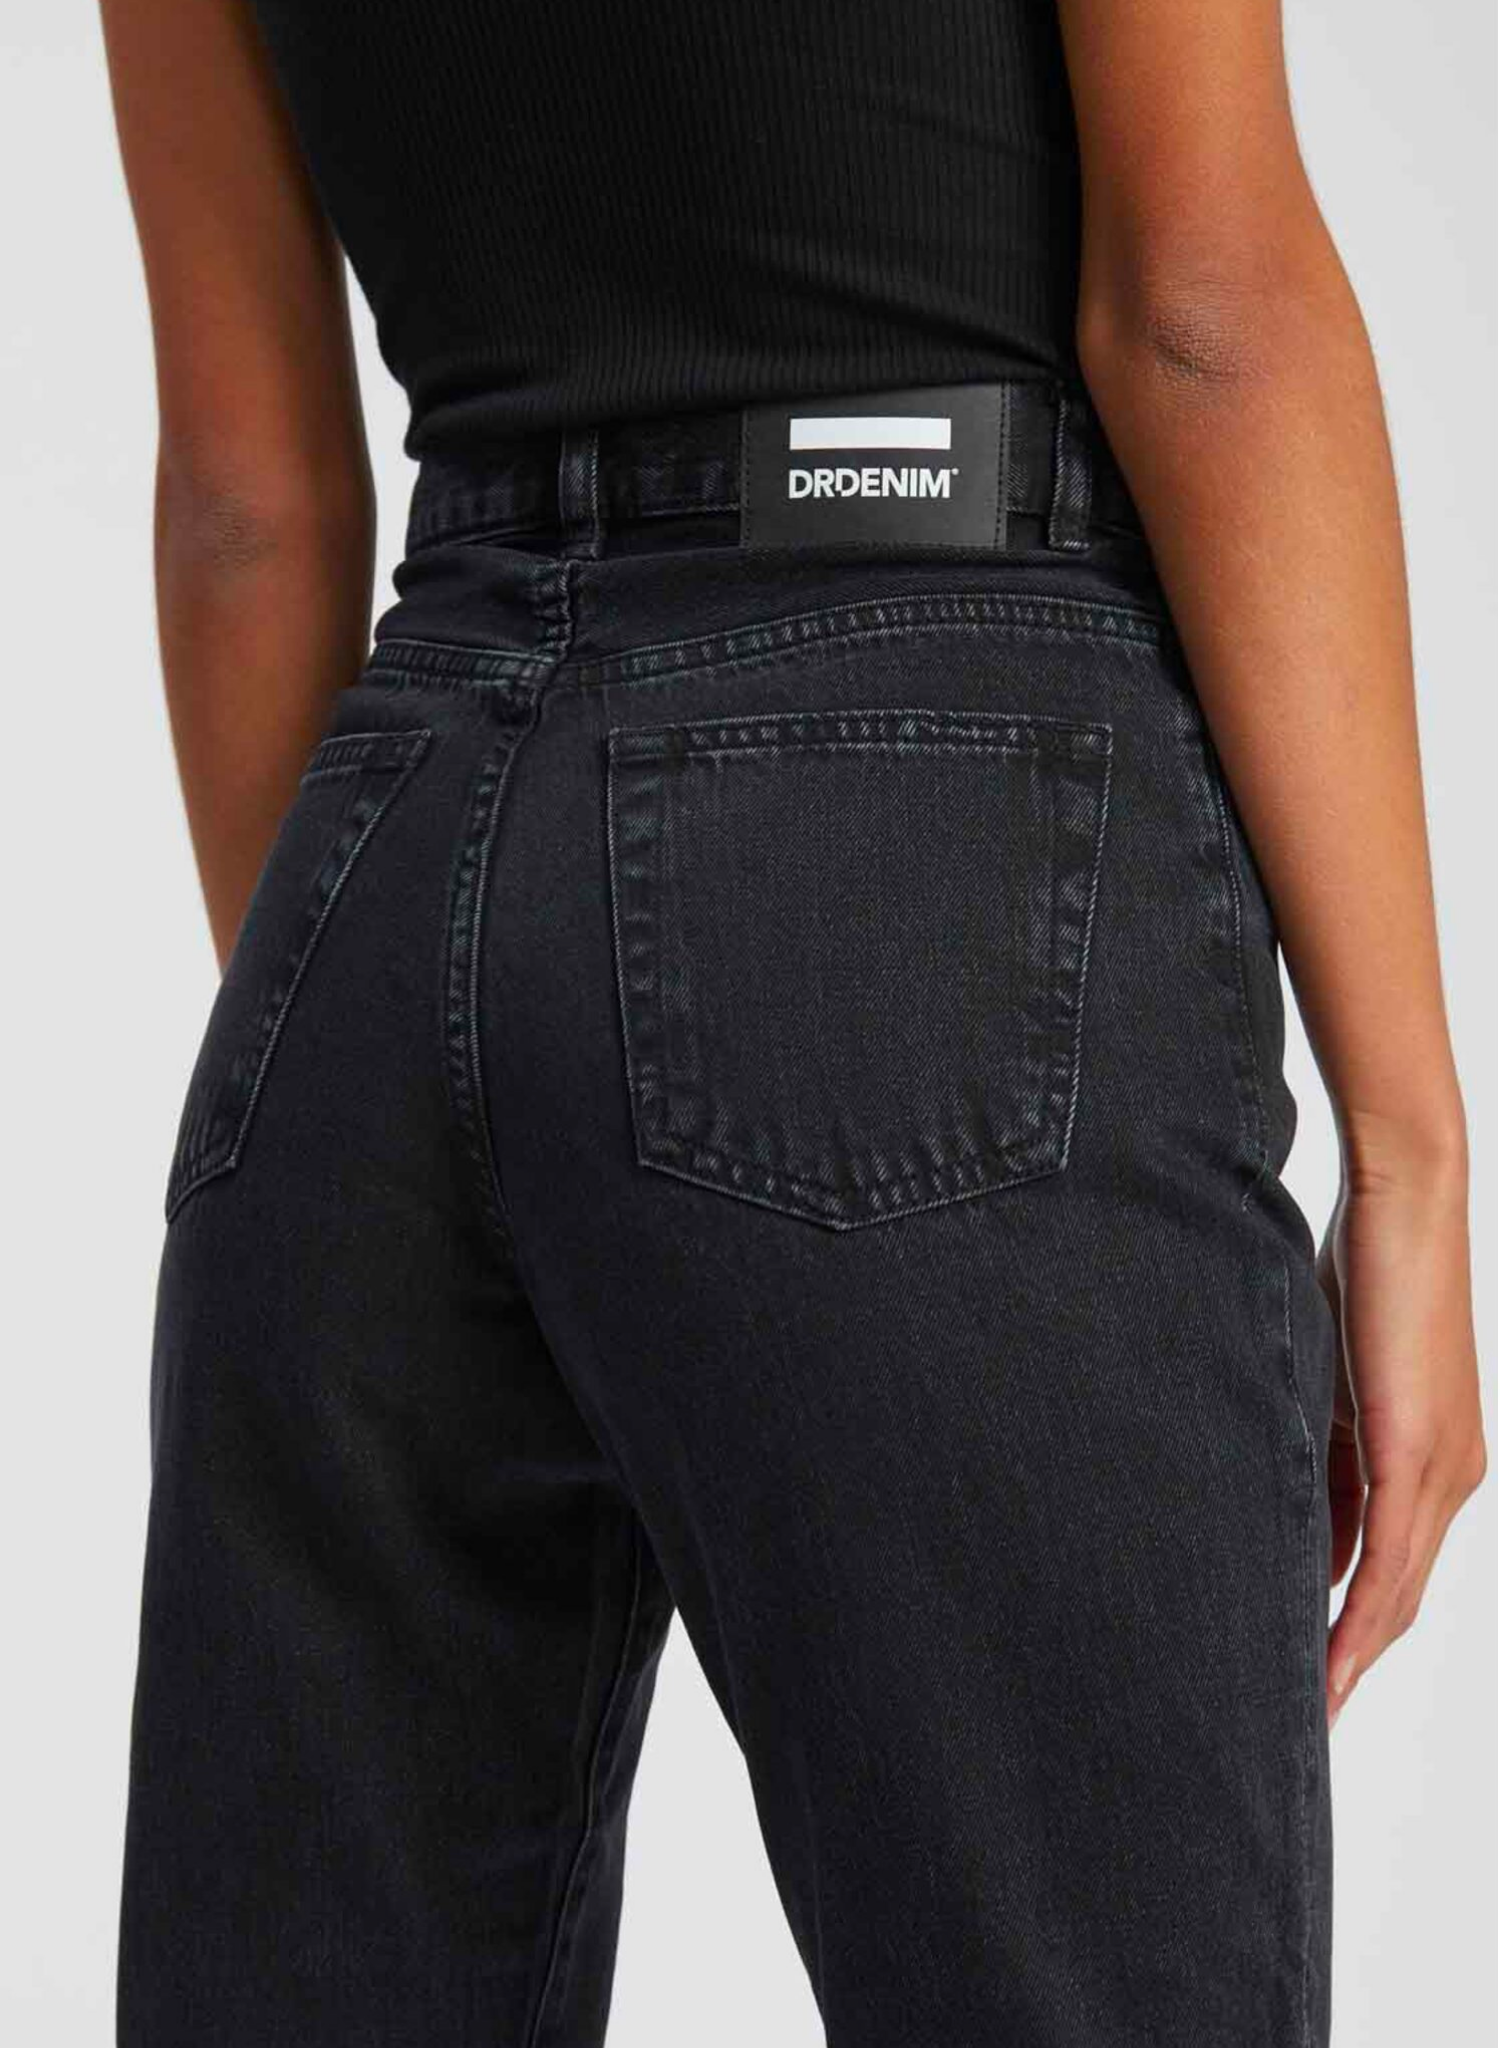 Nora Jeans in Black Retro